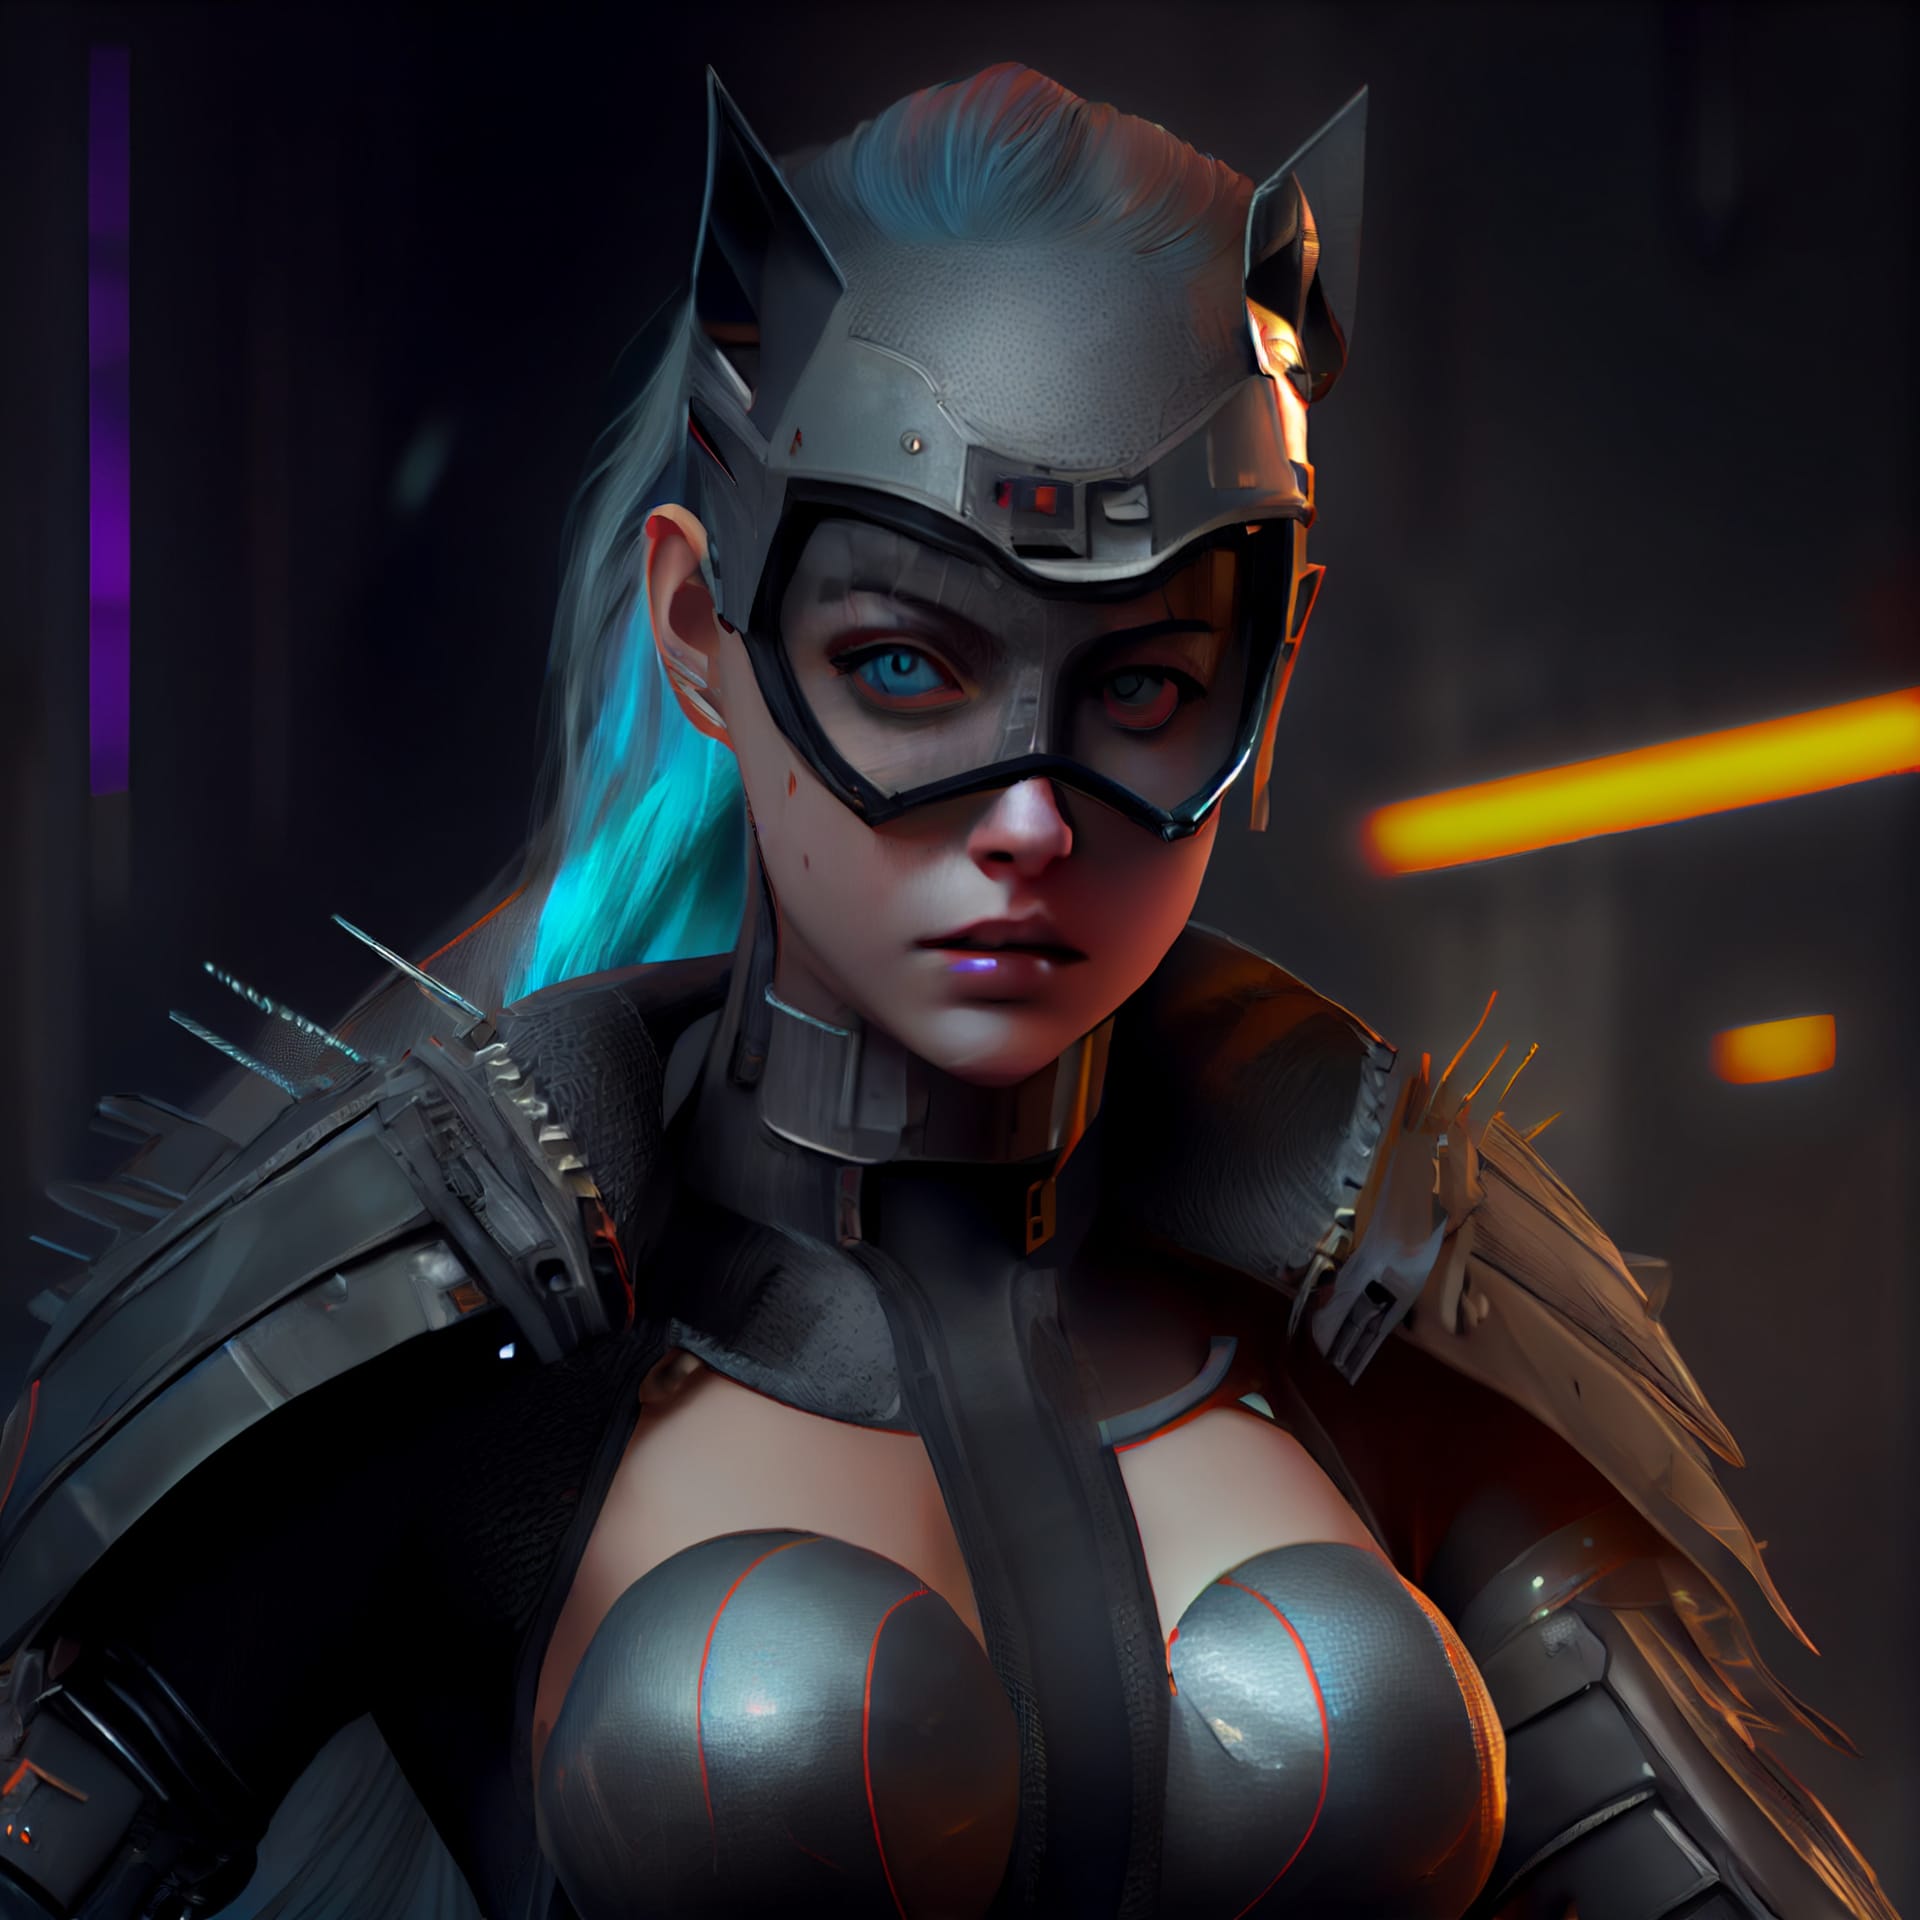 Cyberpunk warrior woman futuristic soldier 3d render illustration